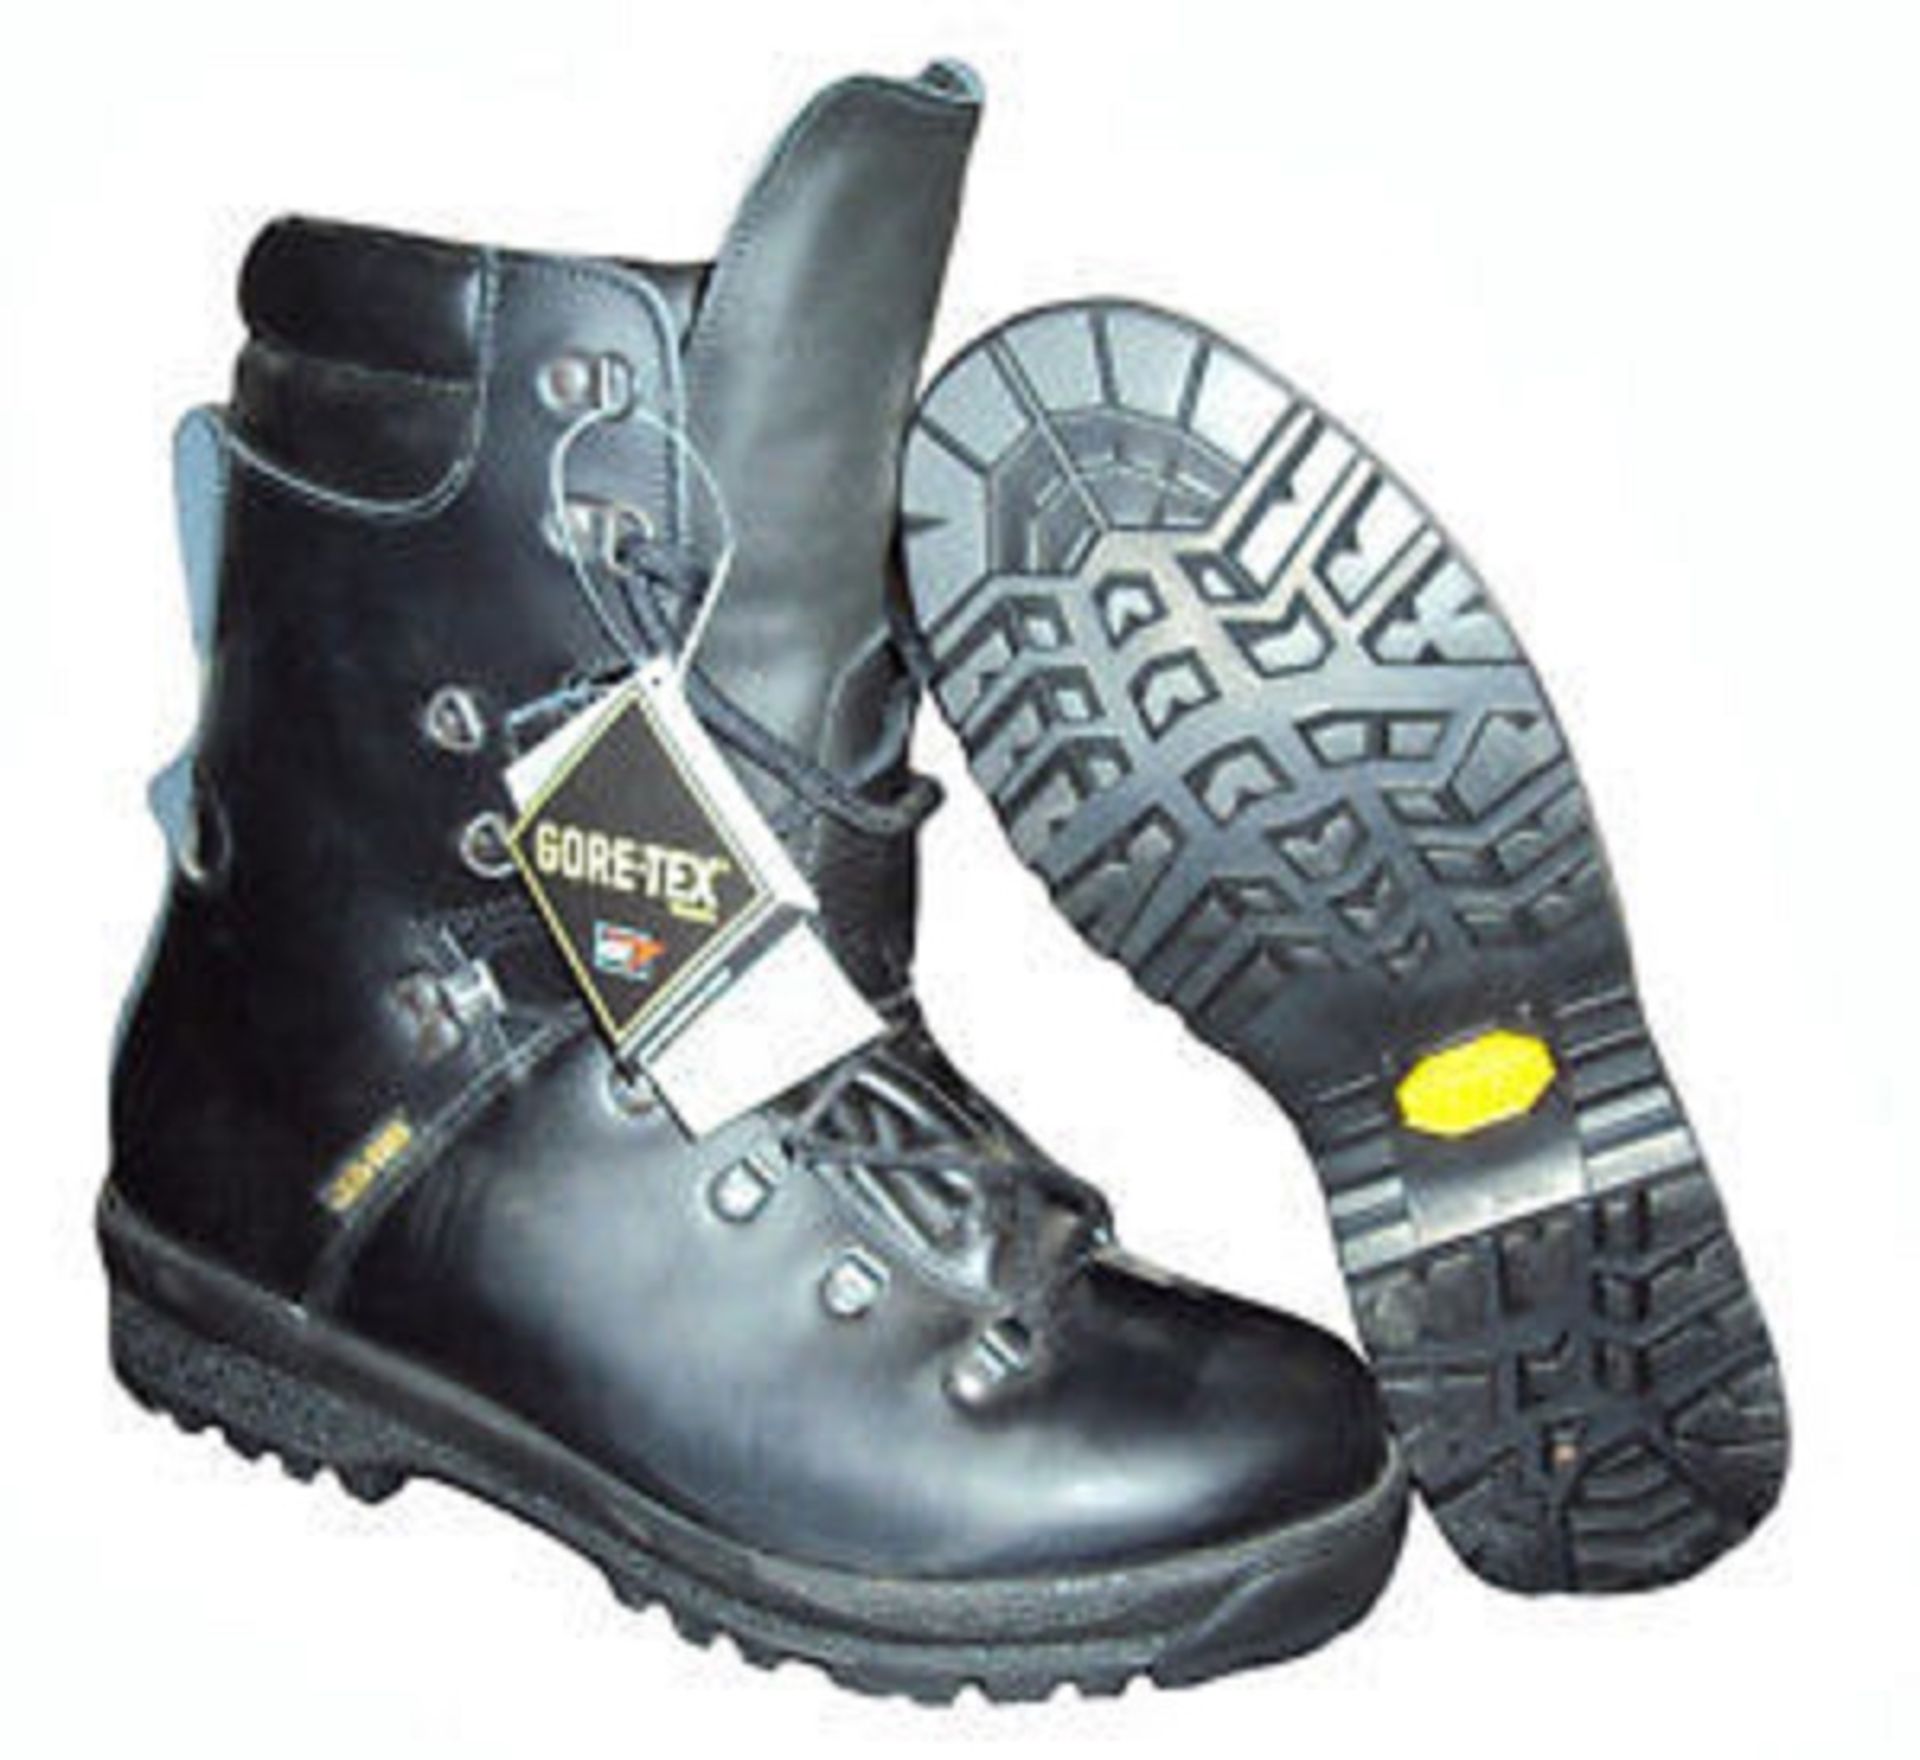 6 x ECW New Black Boots - Size UK 11 Small - British Army